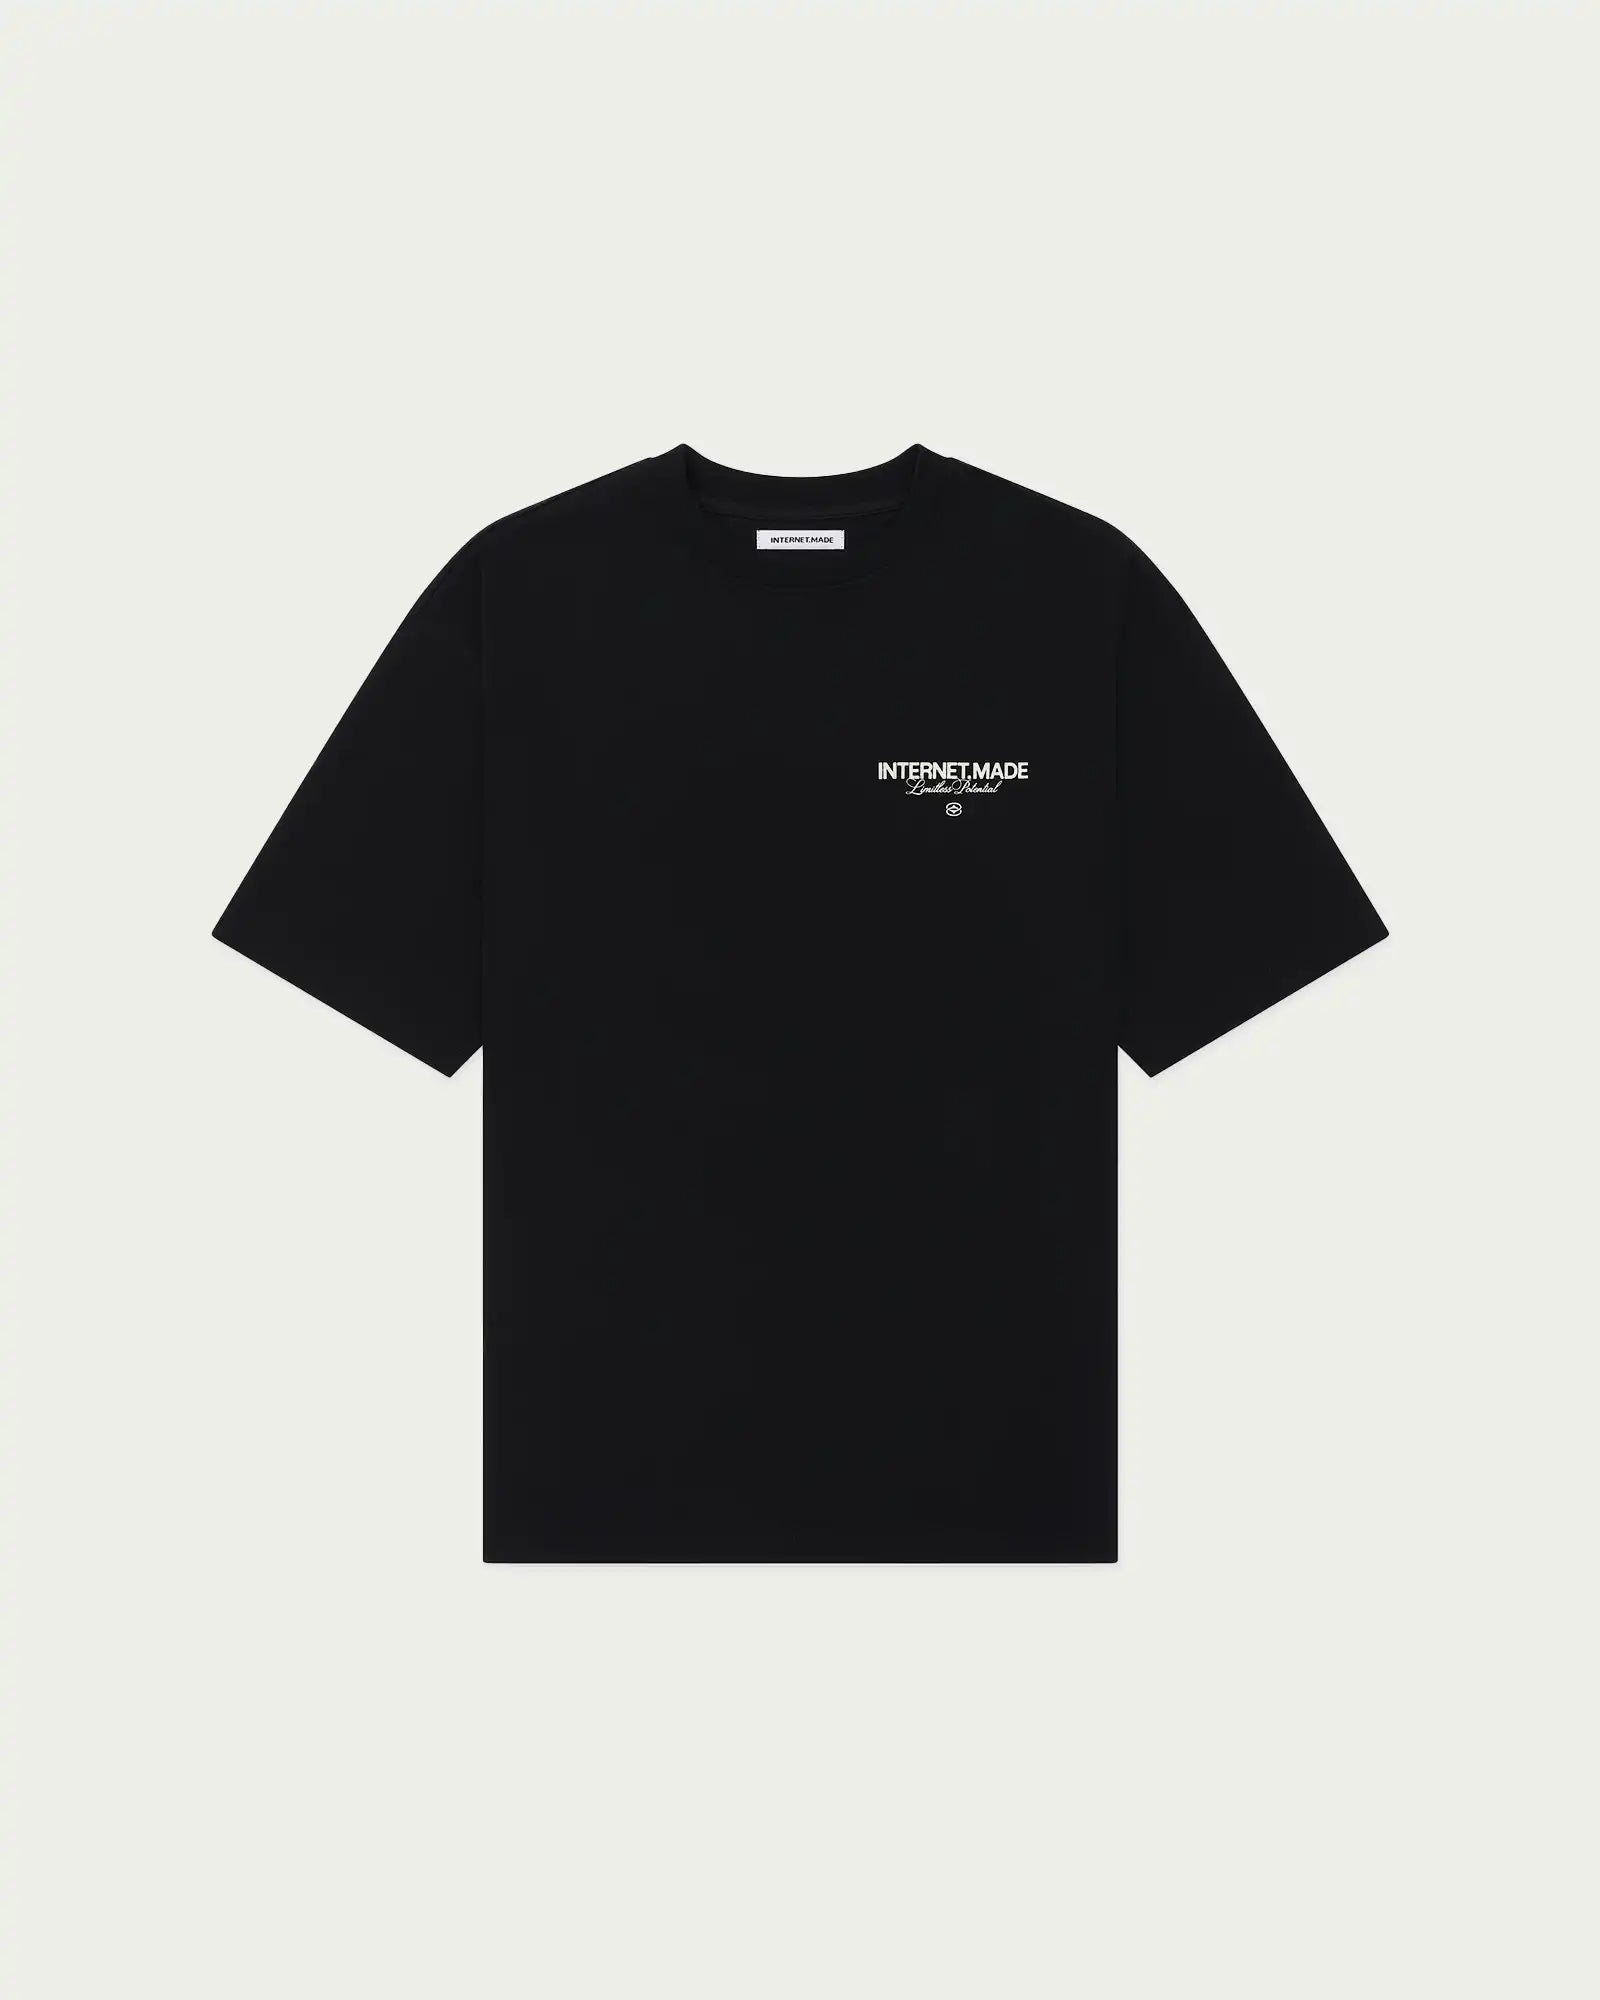 Limitless Potential T-Shirt / Black